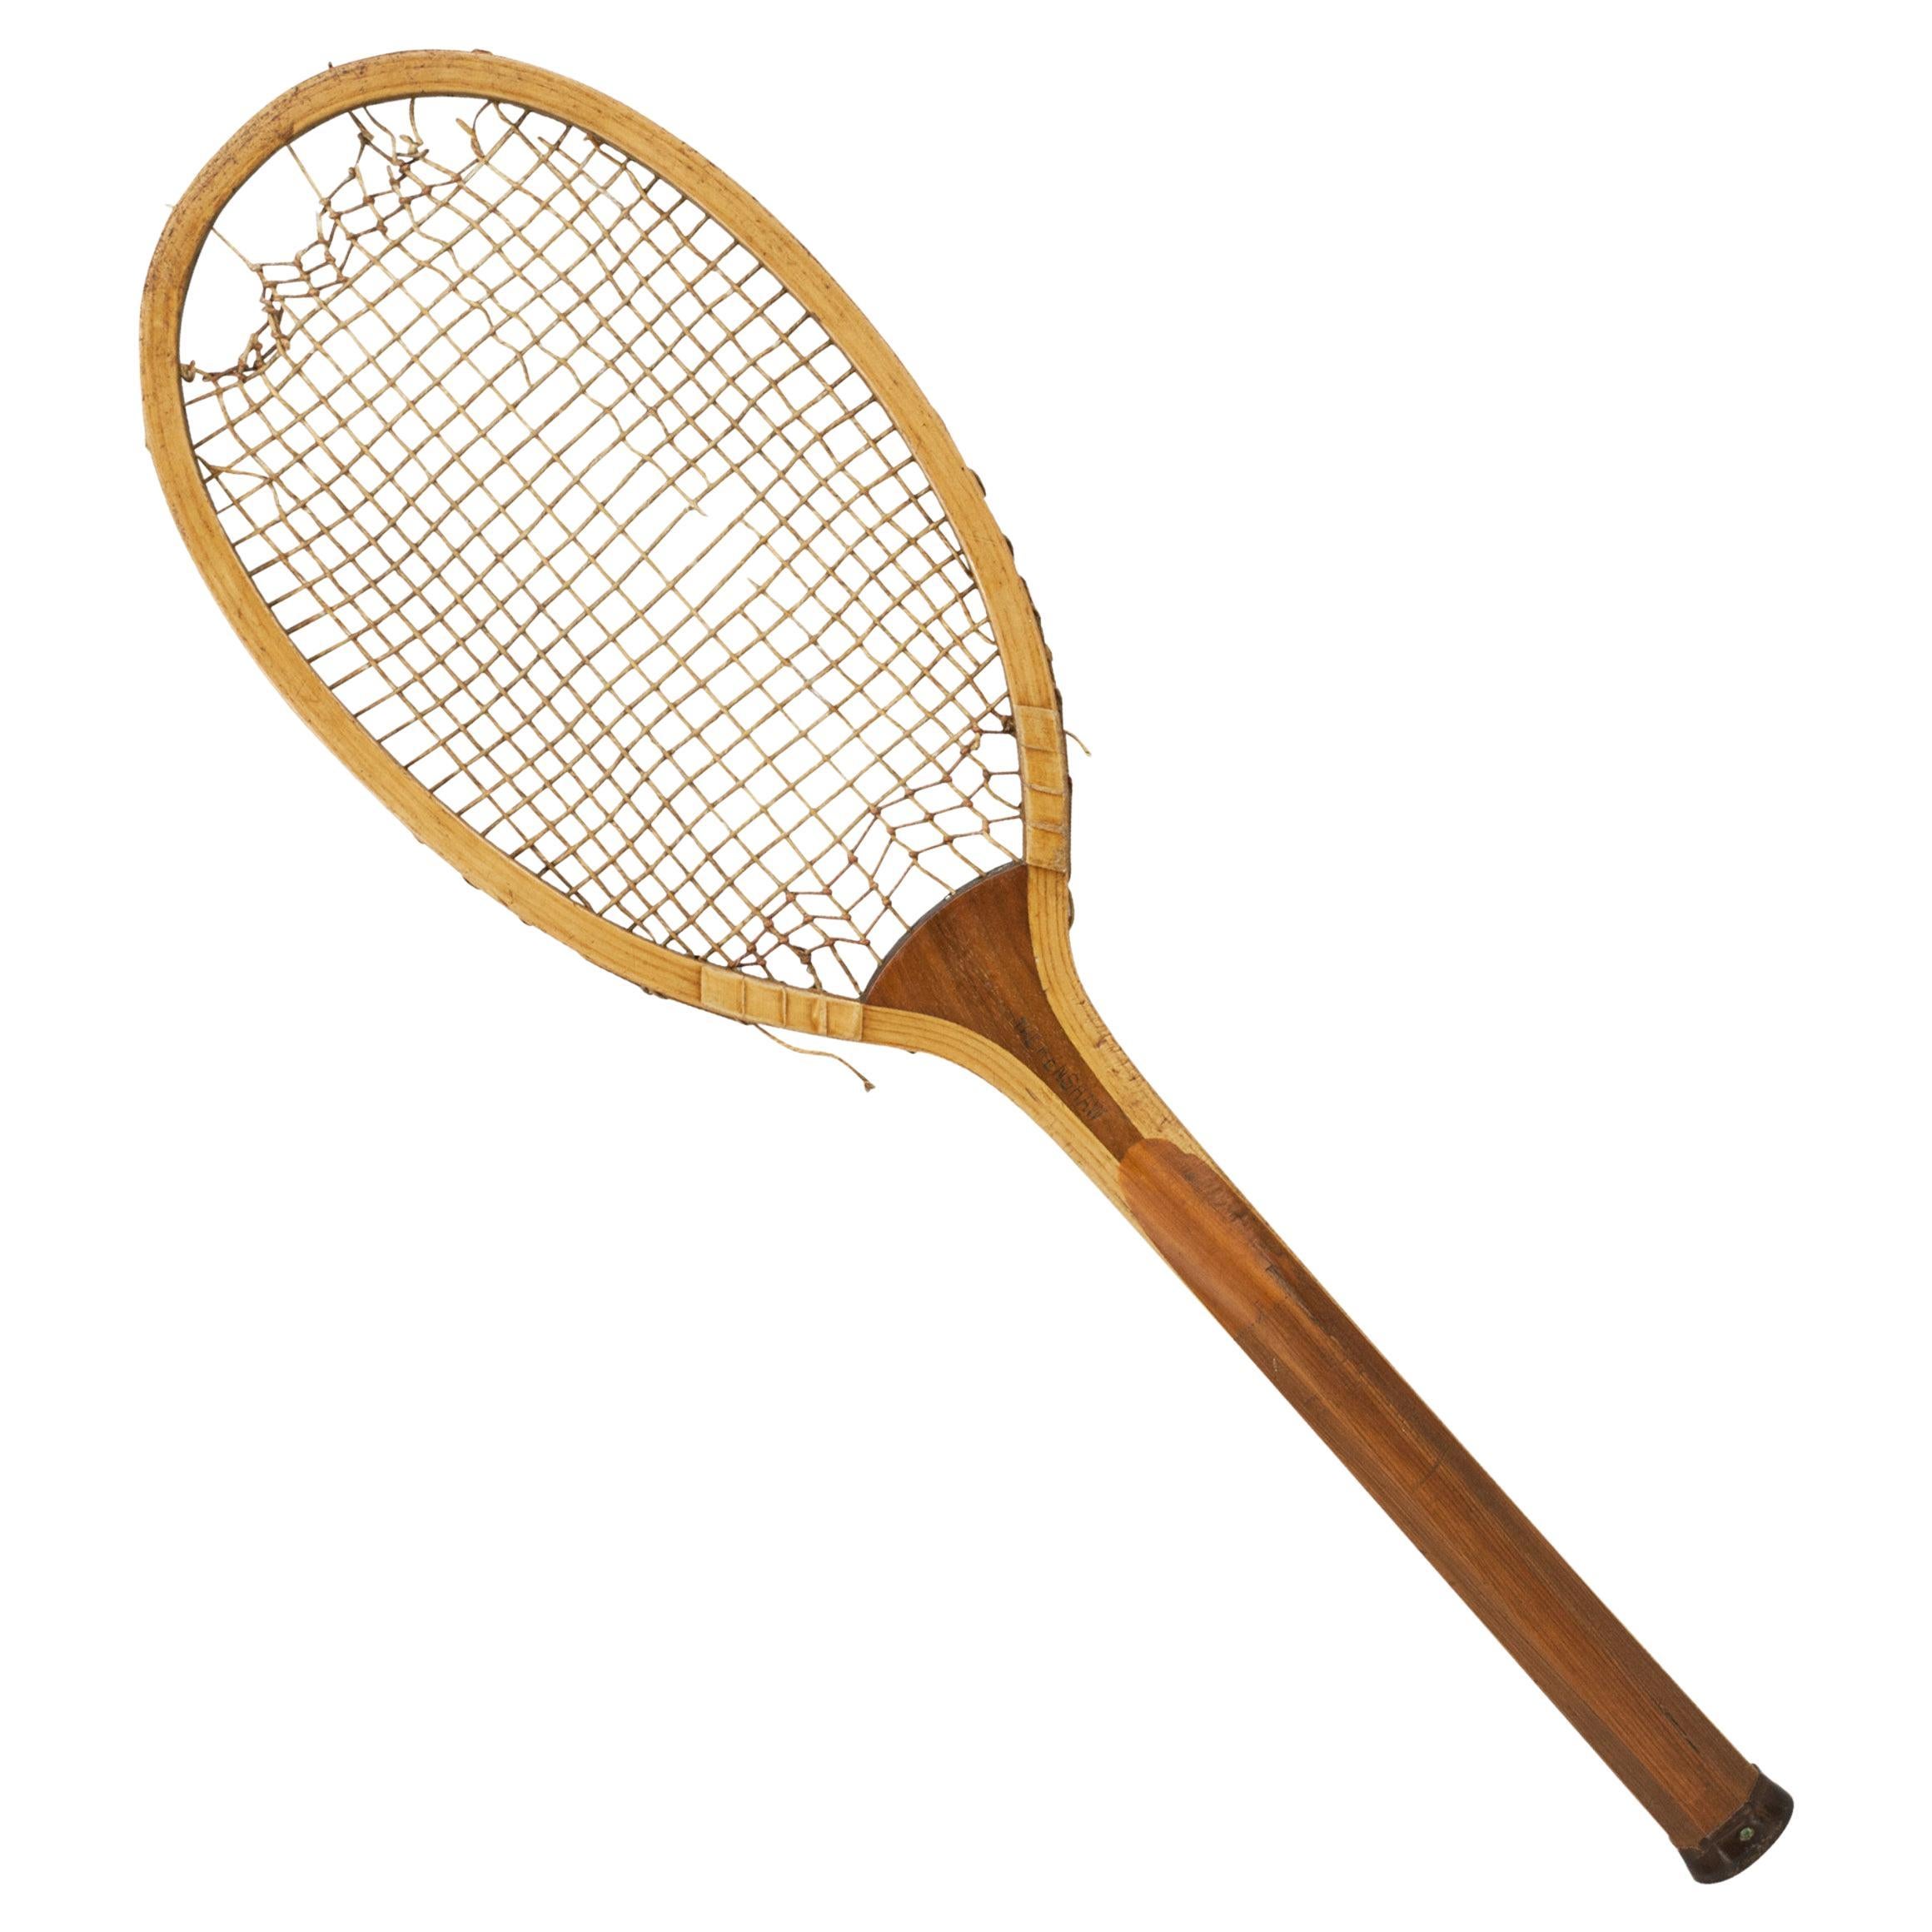 Antique Lawn Tennis Racket, the Renshaw